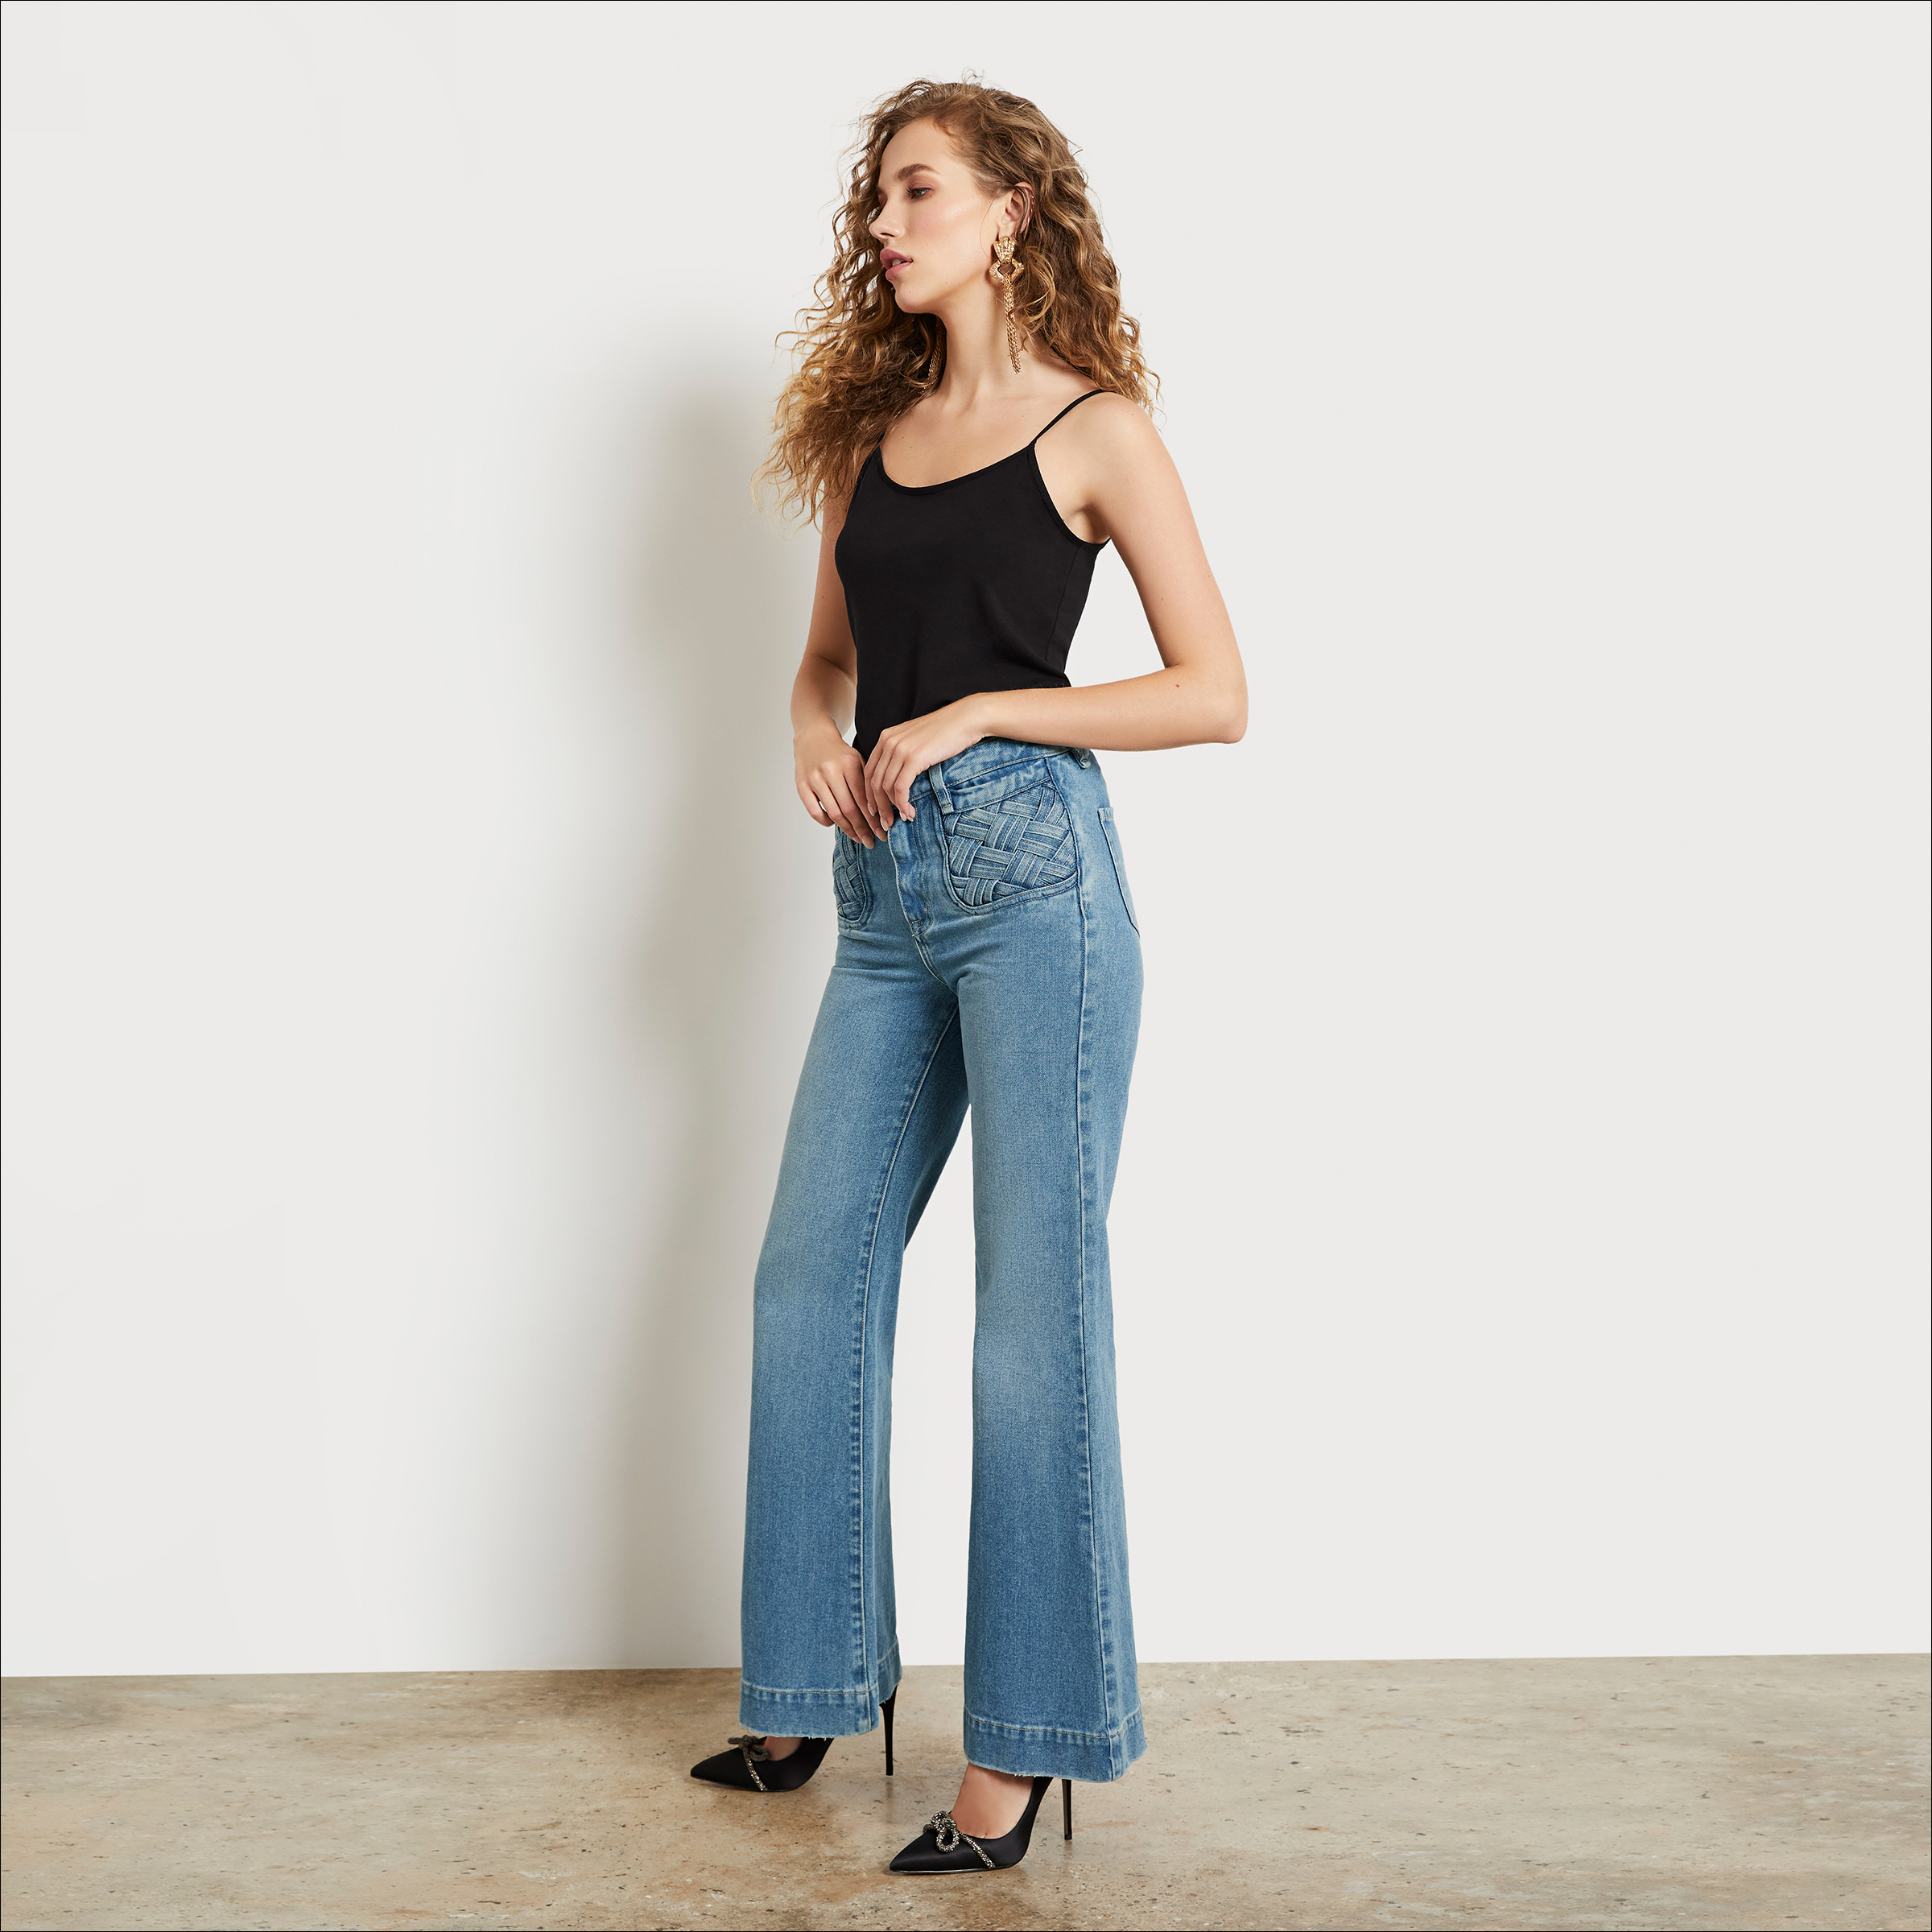 Women's Asset Management High Rise Trouser Jeans